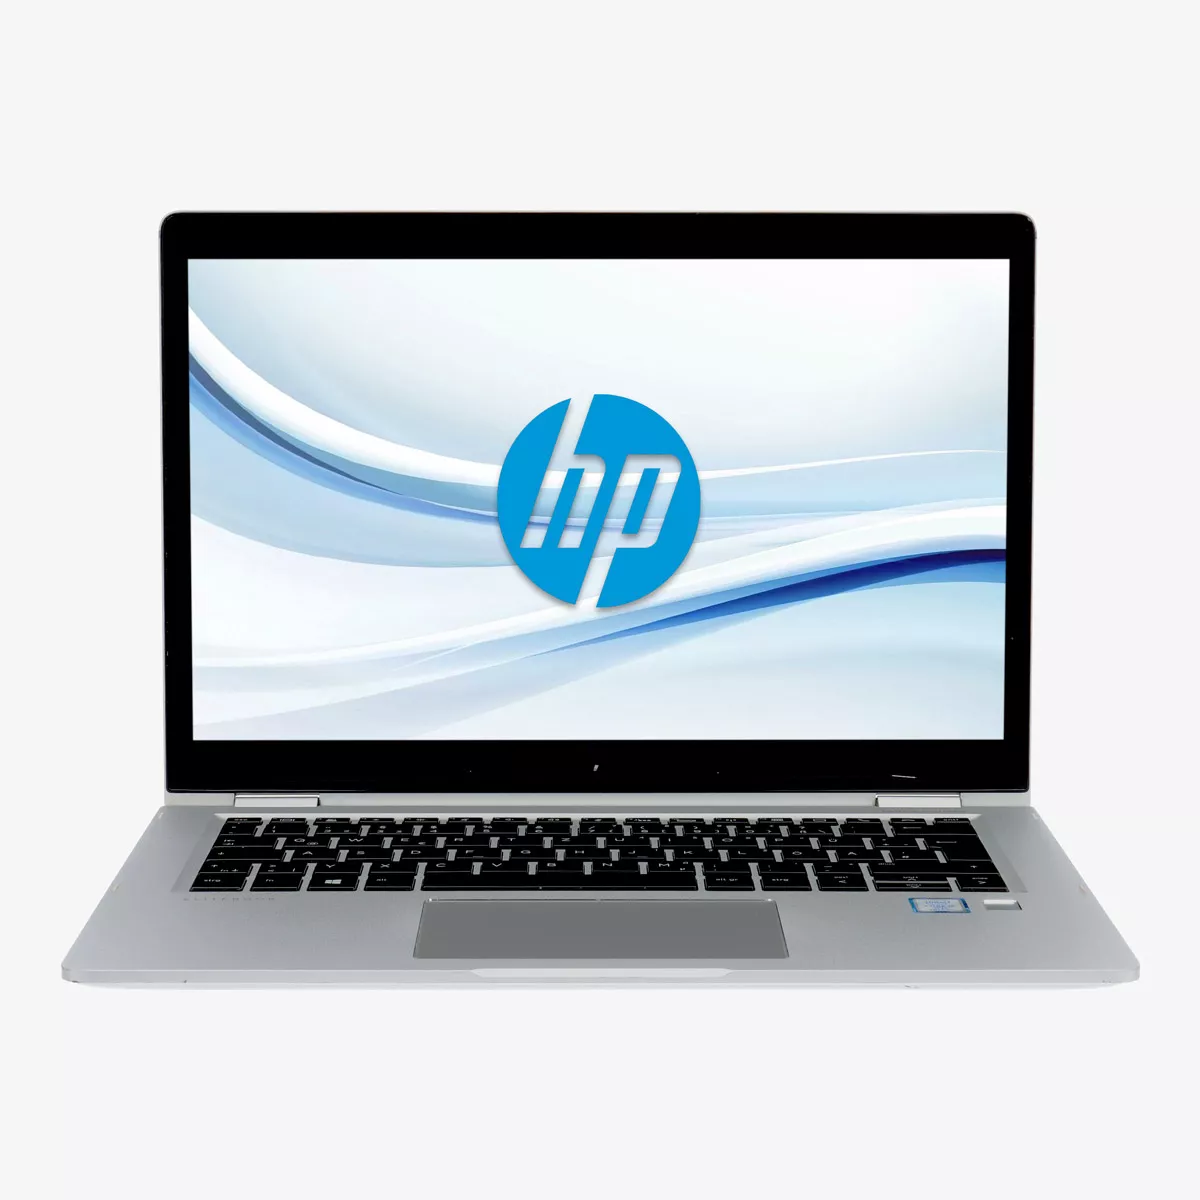 HP EliteBook x360 1030 G2 Core i5 7300U Touch 8 GB 500 GB M.2 nVME SSD Webcam B